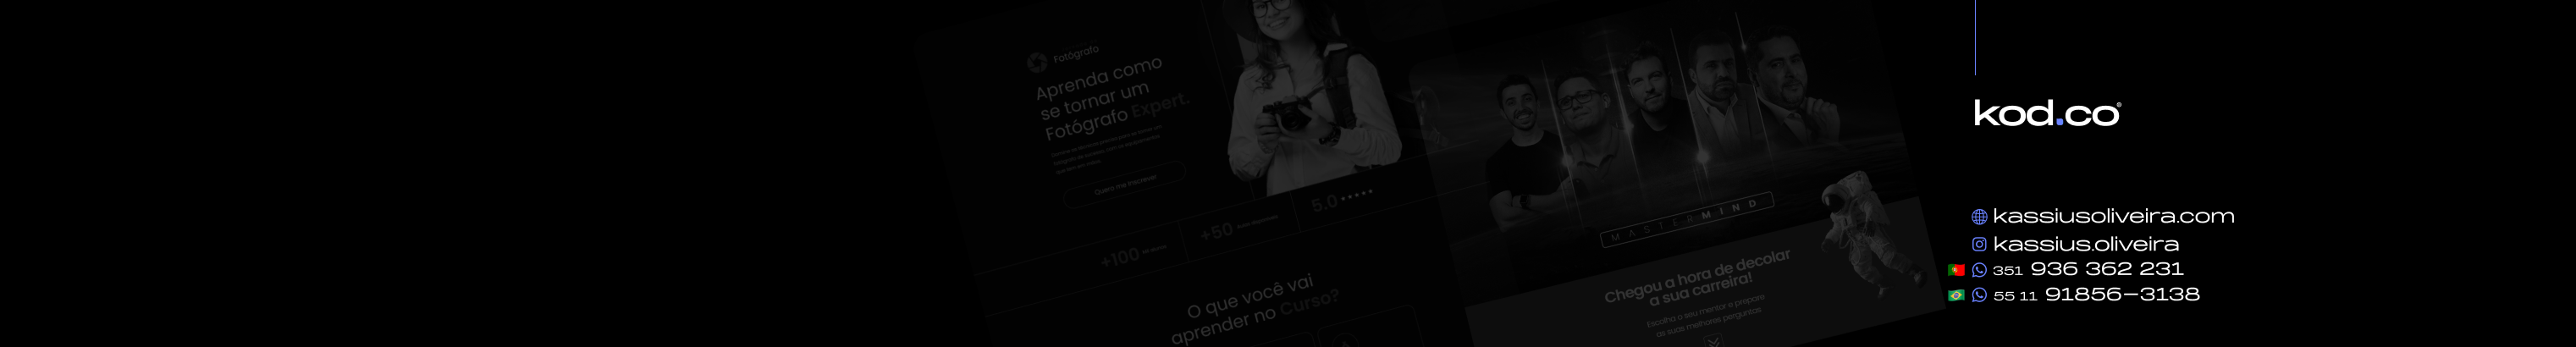 Kassius Oliveira's profile banner